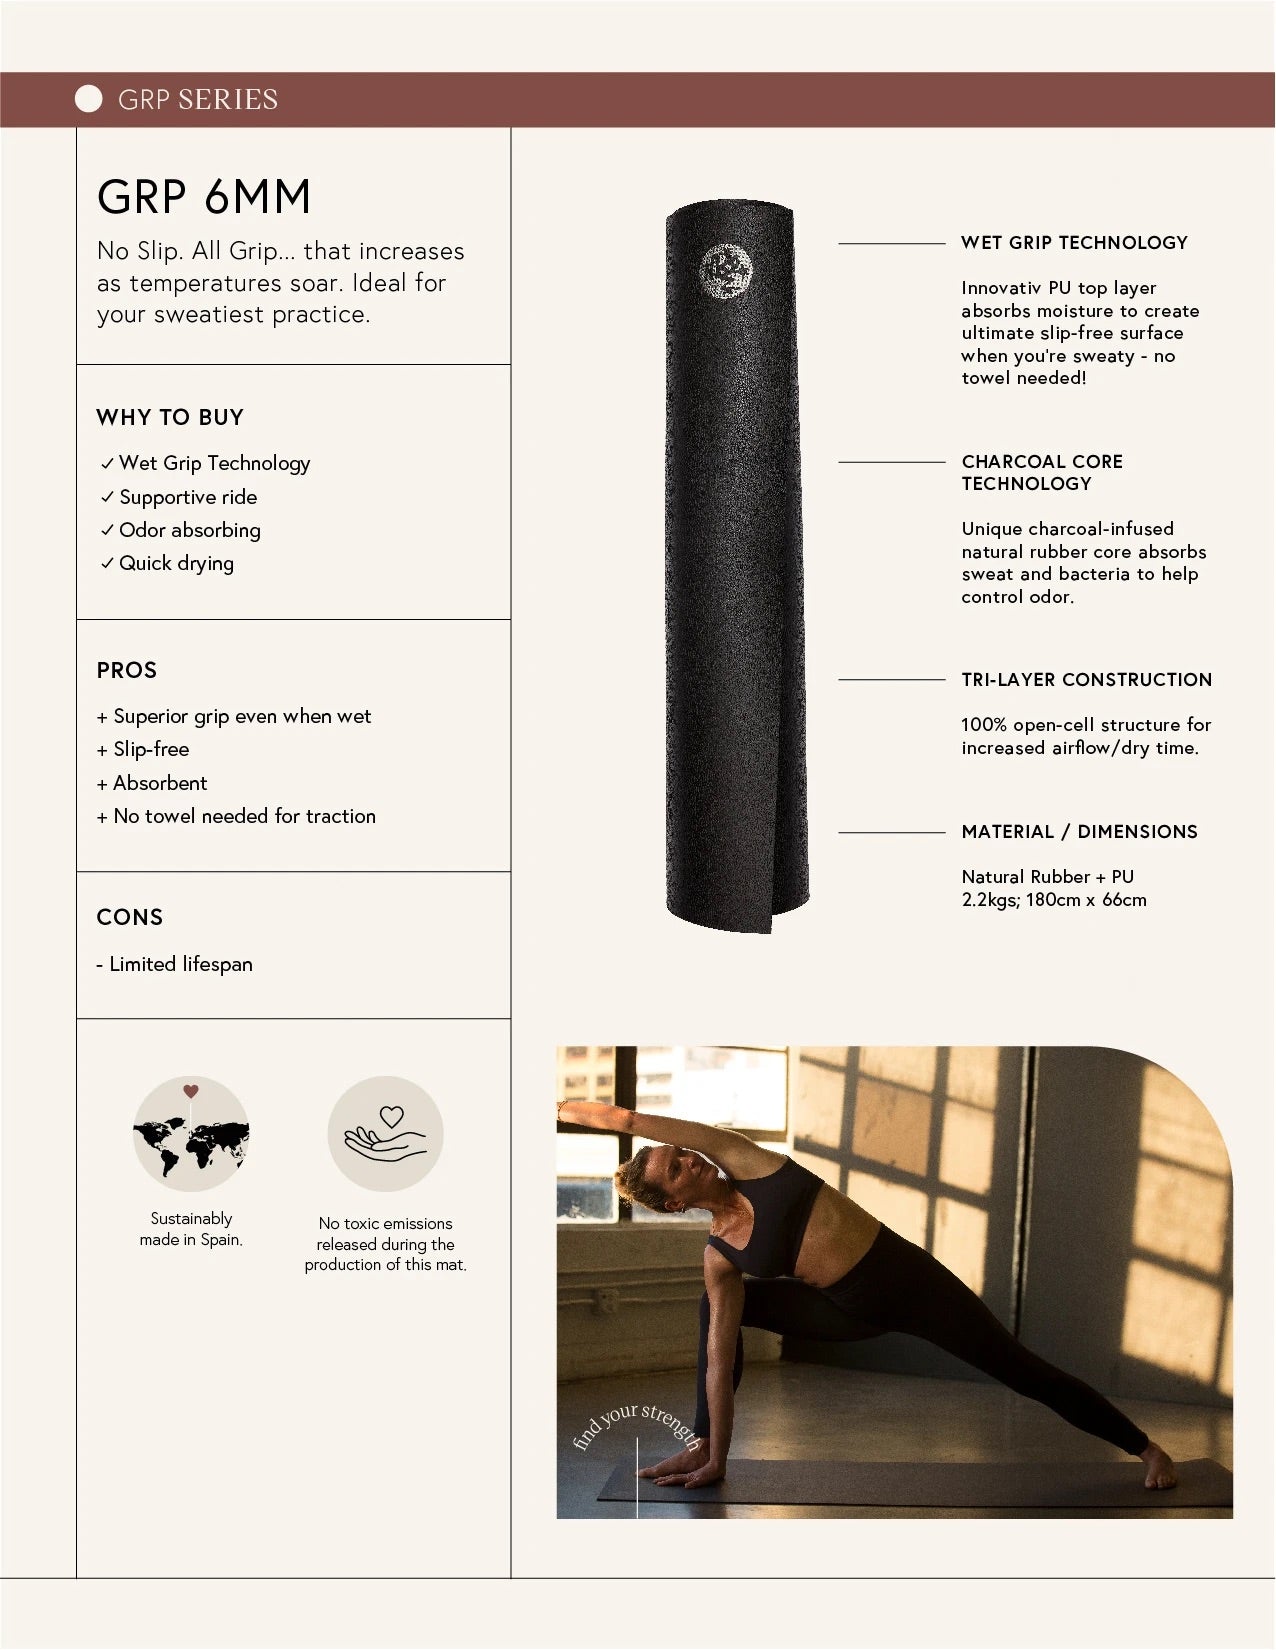 Manduka GRP® Lite Hot Yoga Mat 4mm - Magic